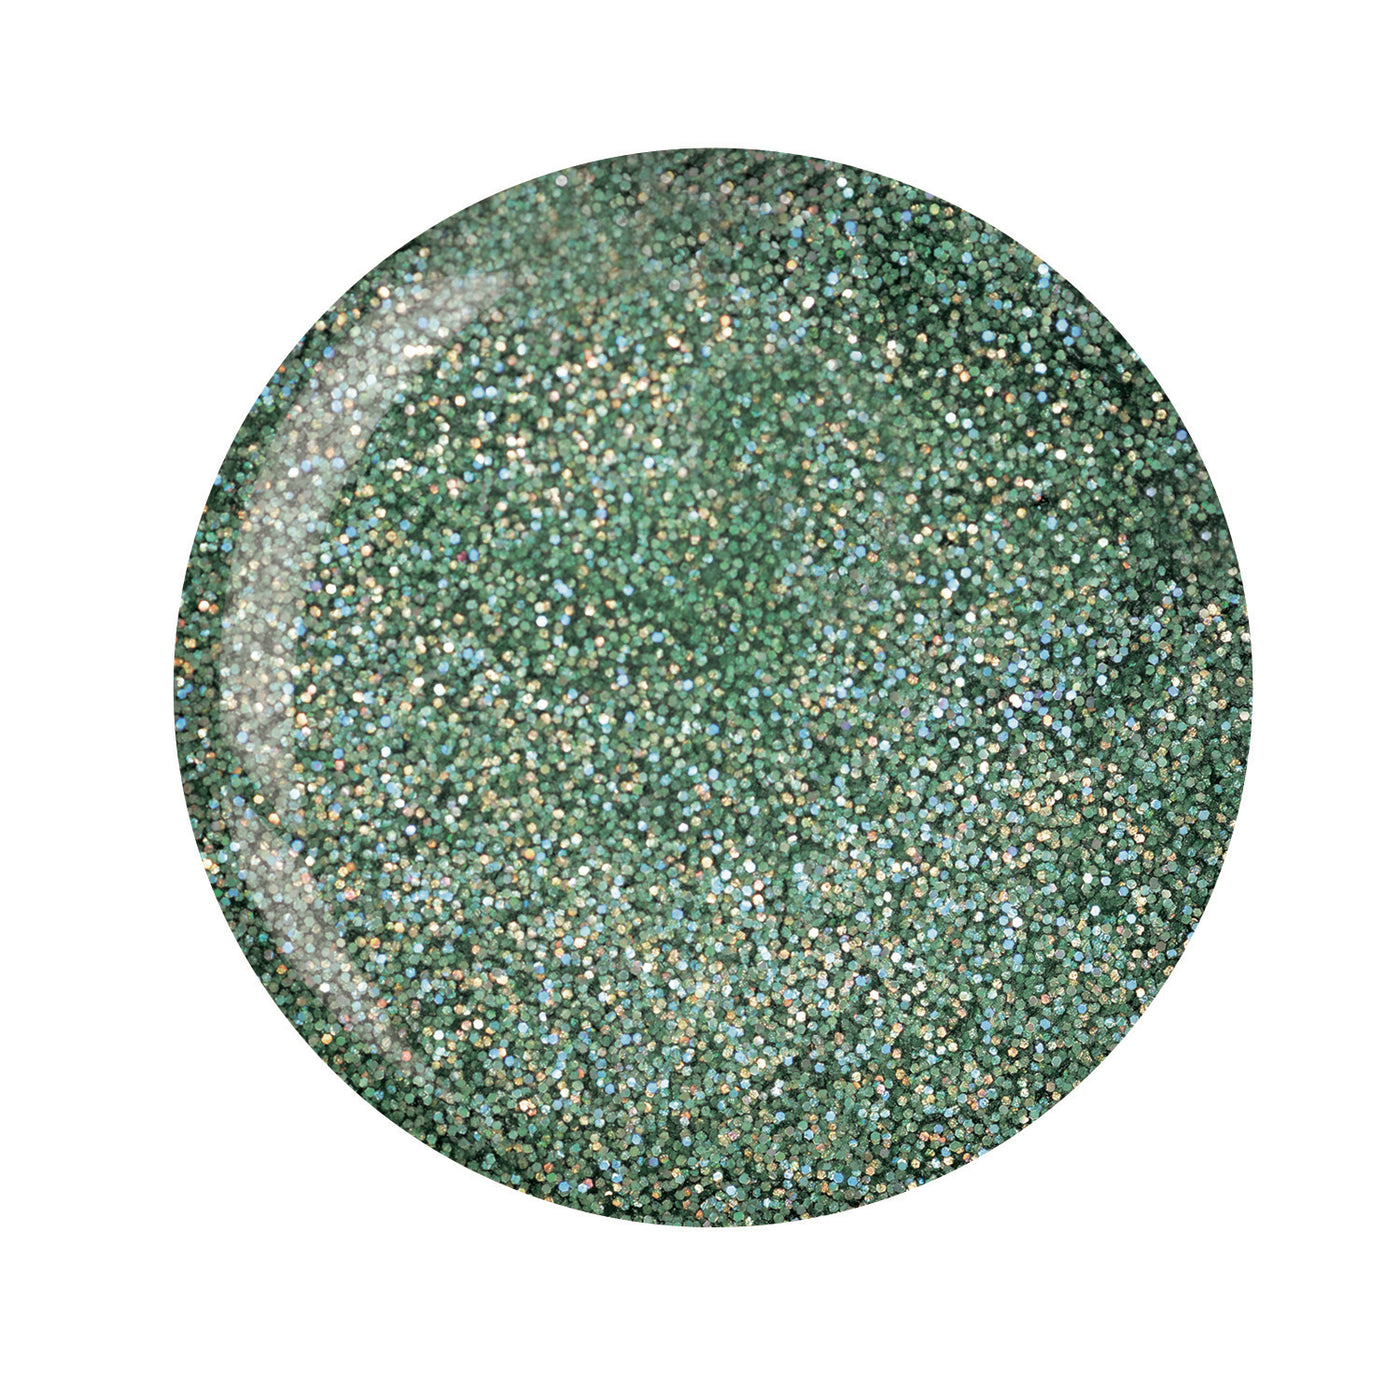 CP Dipping Powder14g - 5525-5 Emerald Green W/ Rainbow Mica